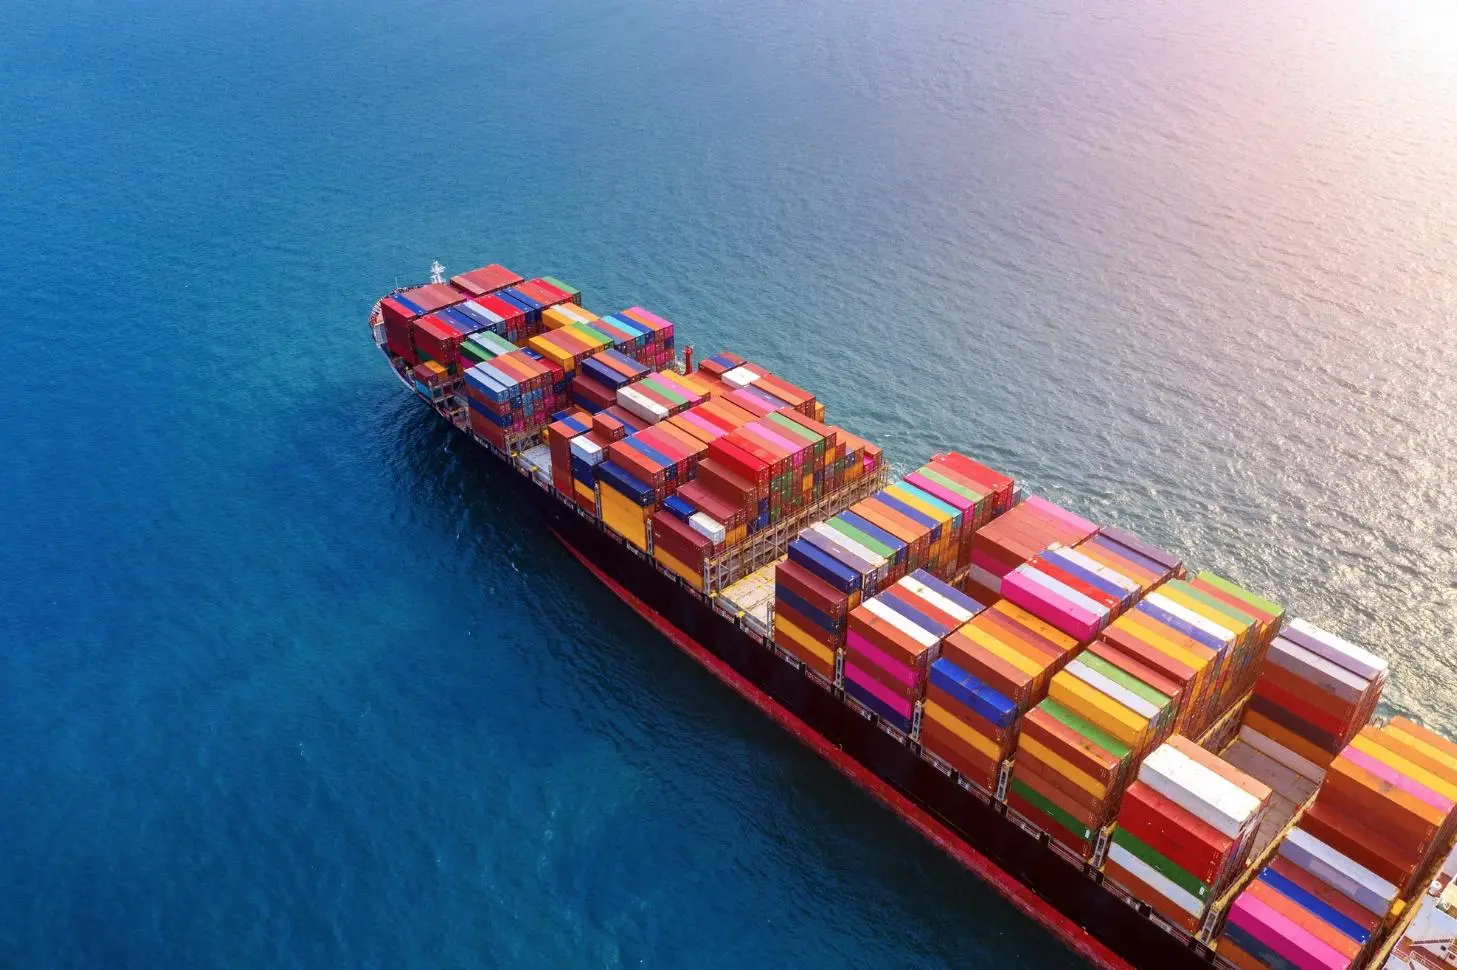 Case Study 1: Ship Supply Logistics